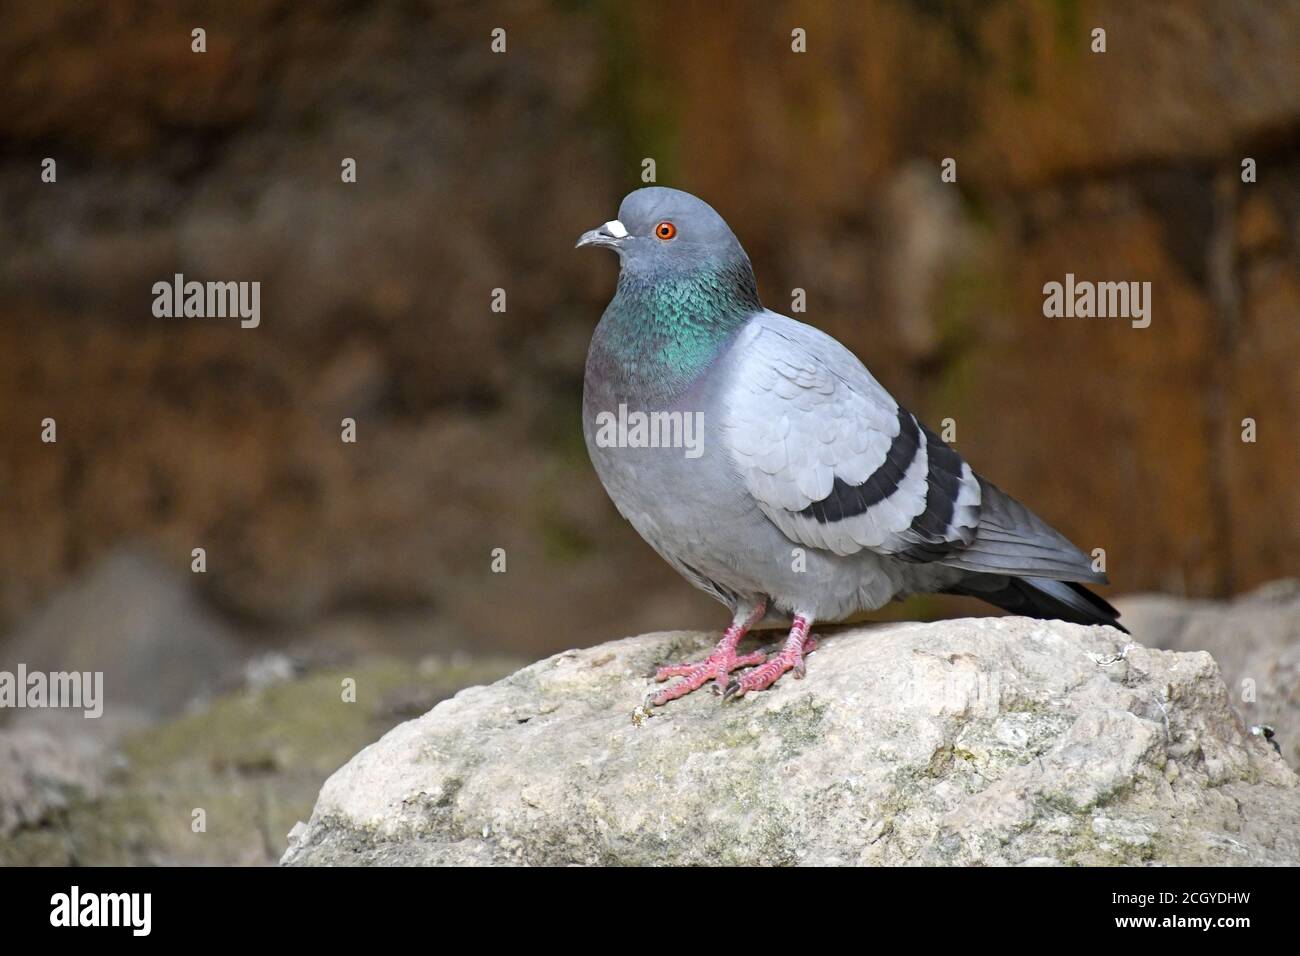 Rock pigeon, Rock dove, common pigeon, Columba livia Stock Photo